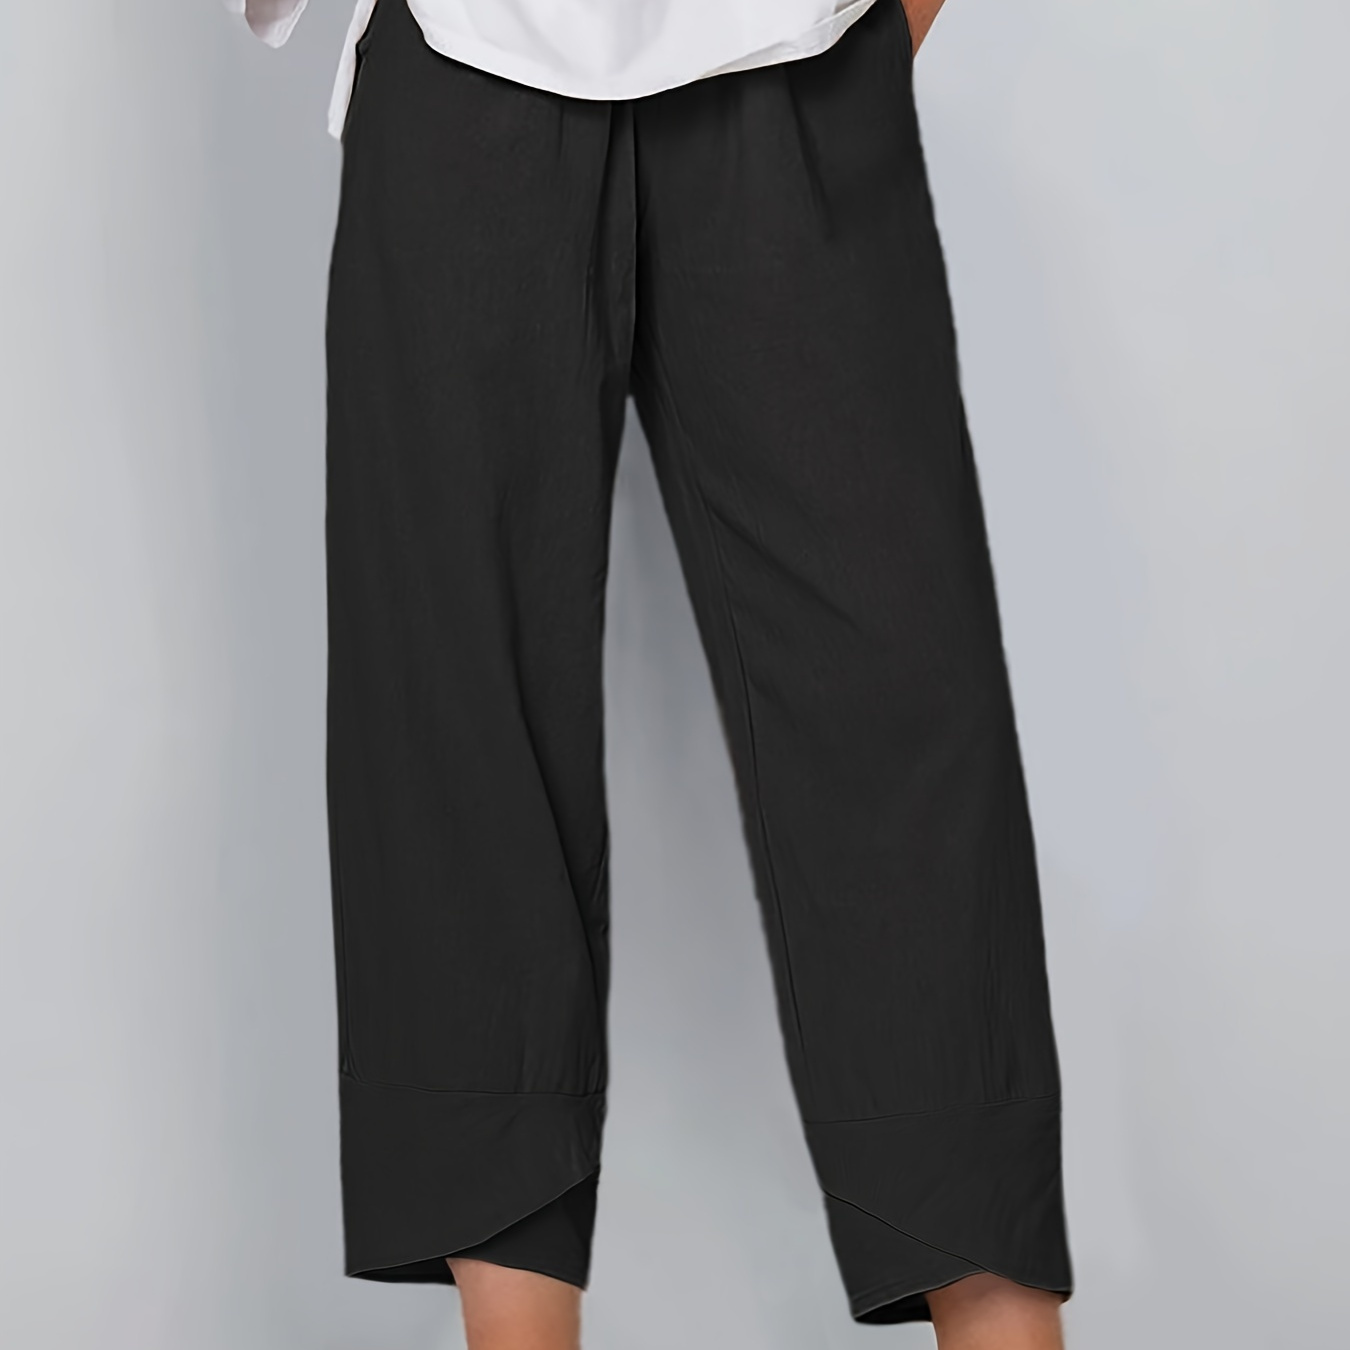 

Loose Pocket Pants, Casual Elastic Waist Solid Fashion Comfy Spring & Summer Pants, Women's Clothing